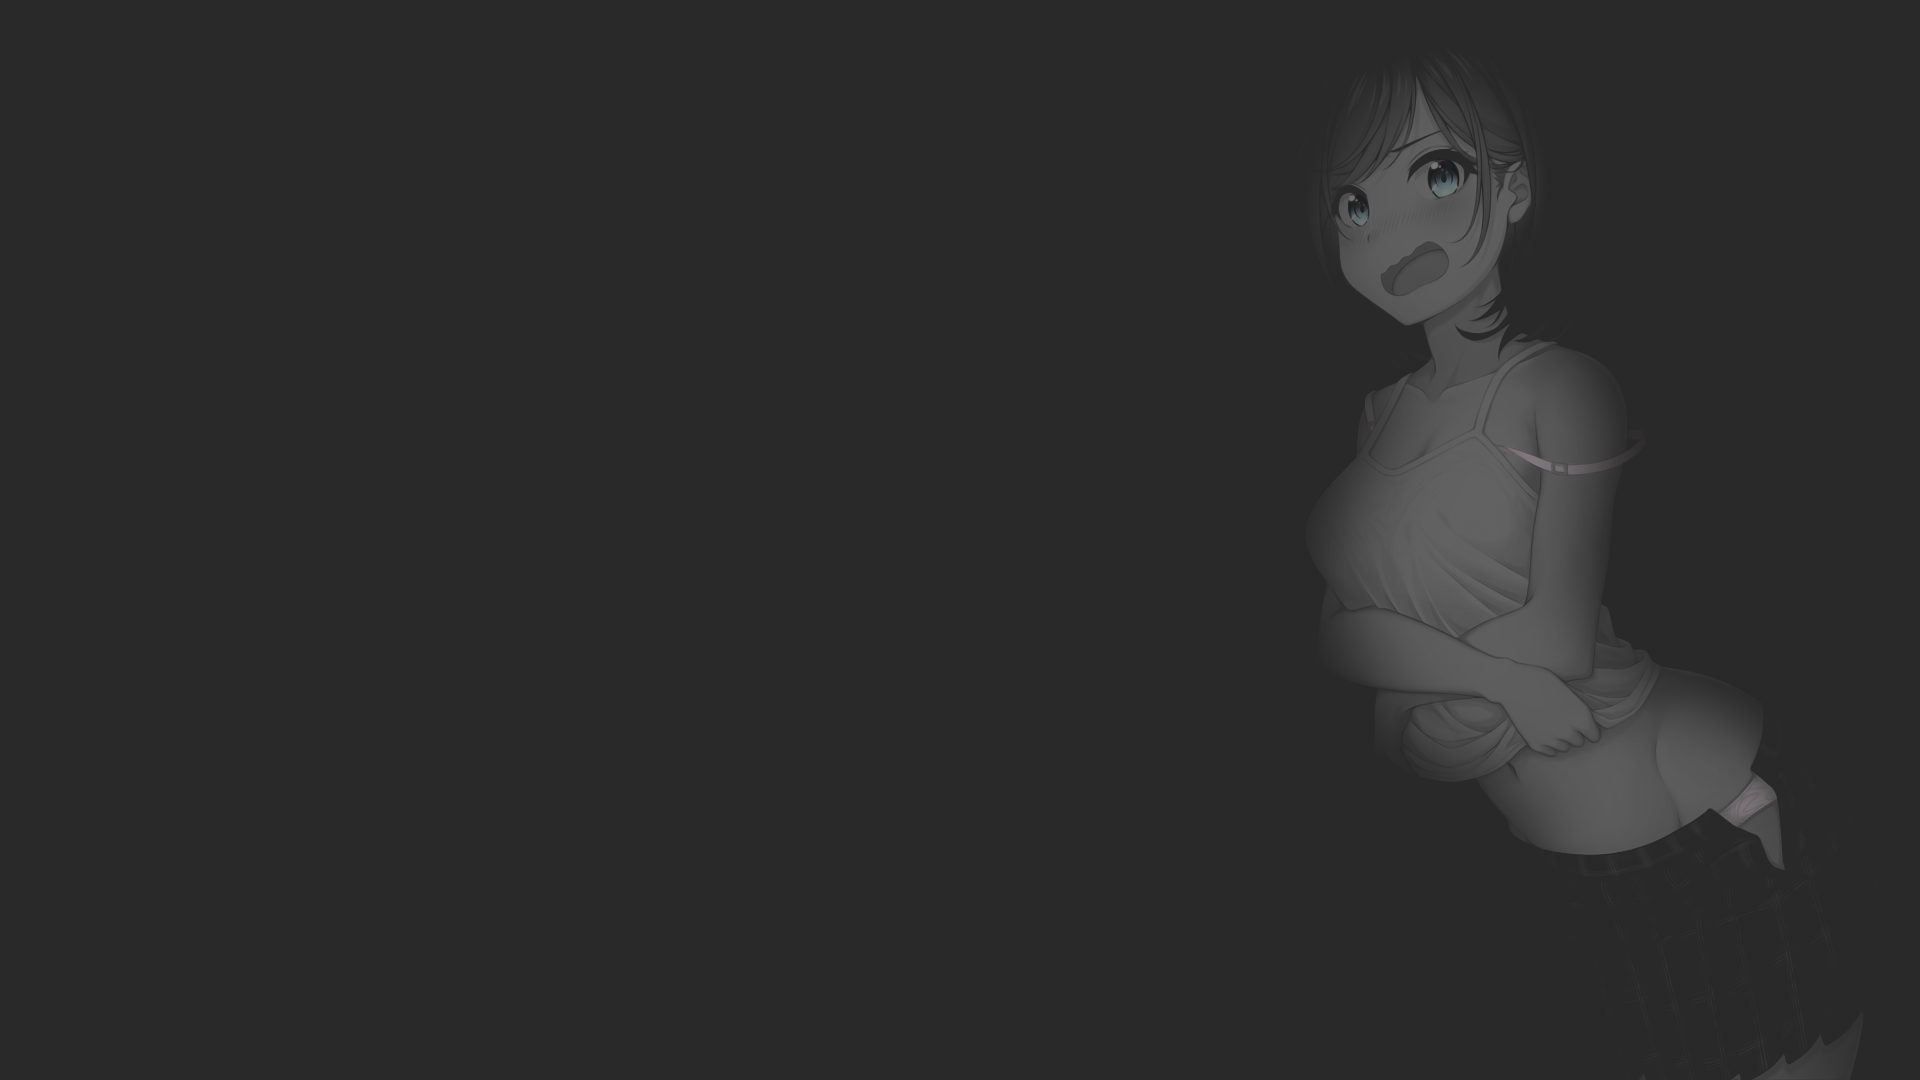 Anime Anime Girls Manga Fan Art Illustration Dark Background Selective Coloring Texture Minimalism M 1920x1080